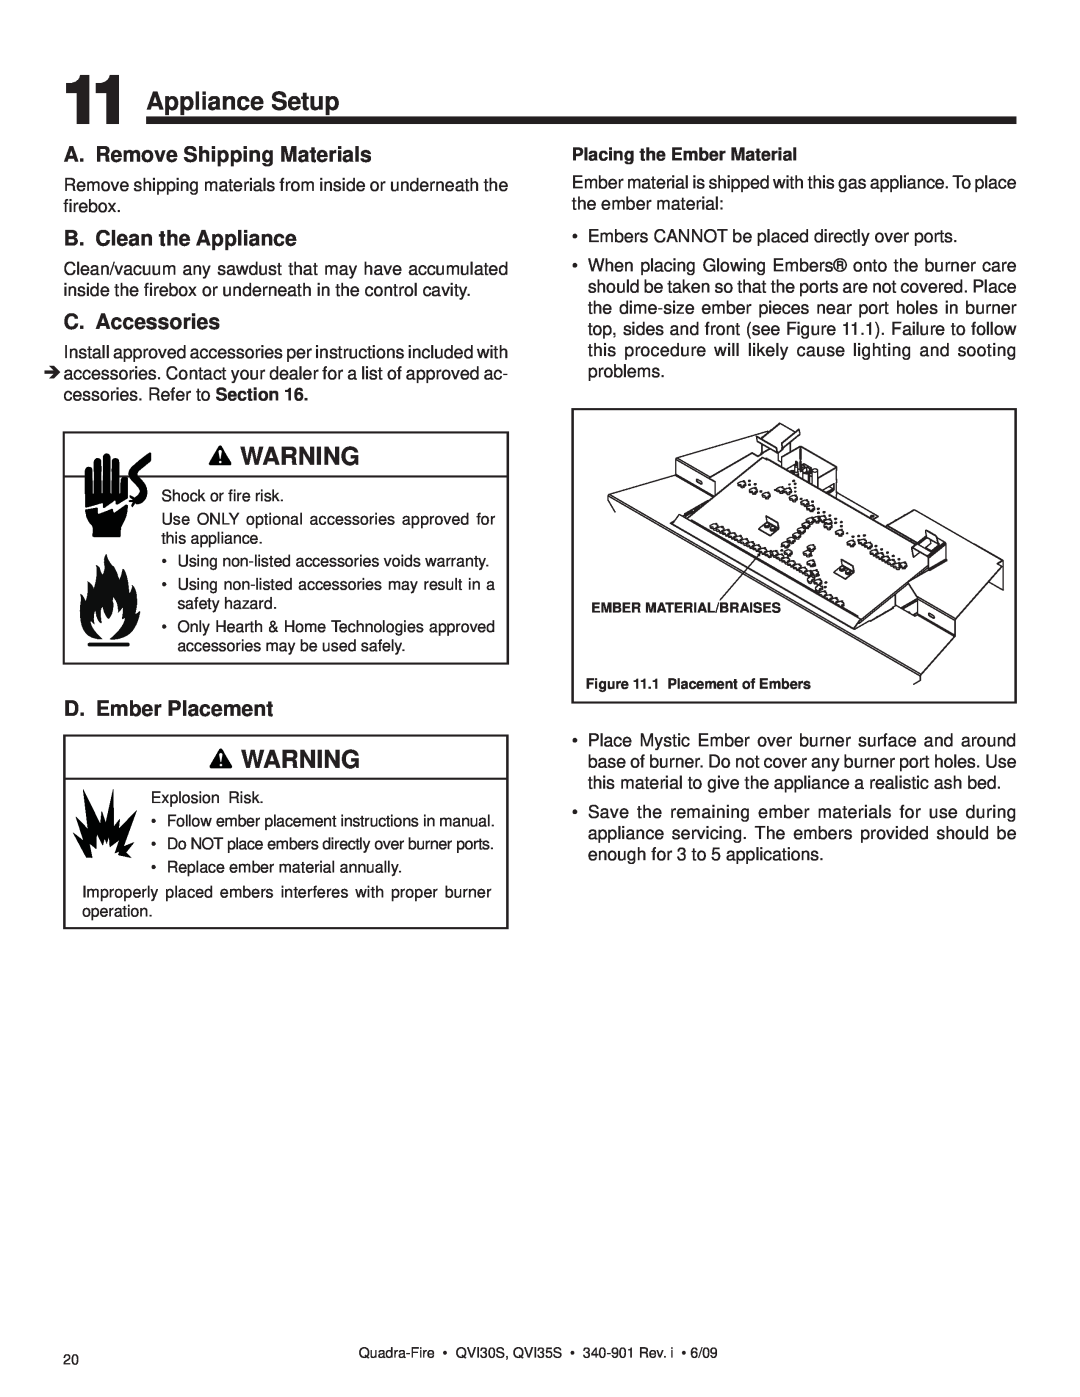 Quadra-Fire QVI35S, QVI30S Appliance Setup, A. Remove Shipping Materials, B. Clean the Appliance, C. Accessories 